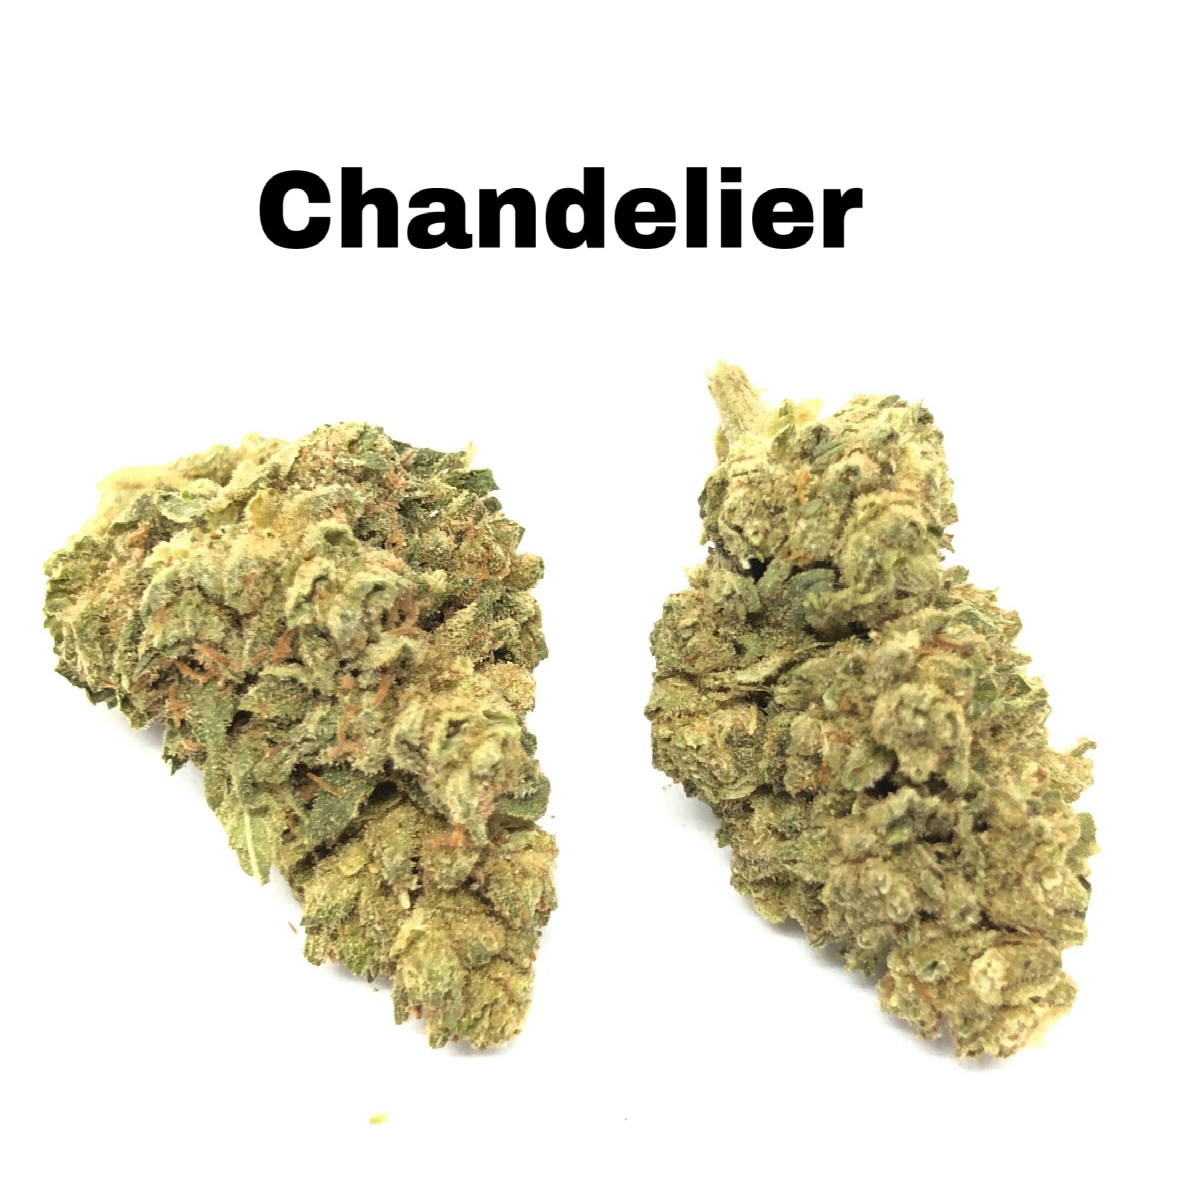 Chandelier CBD Hemp Flower